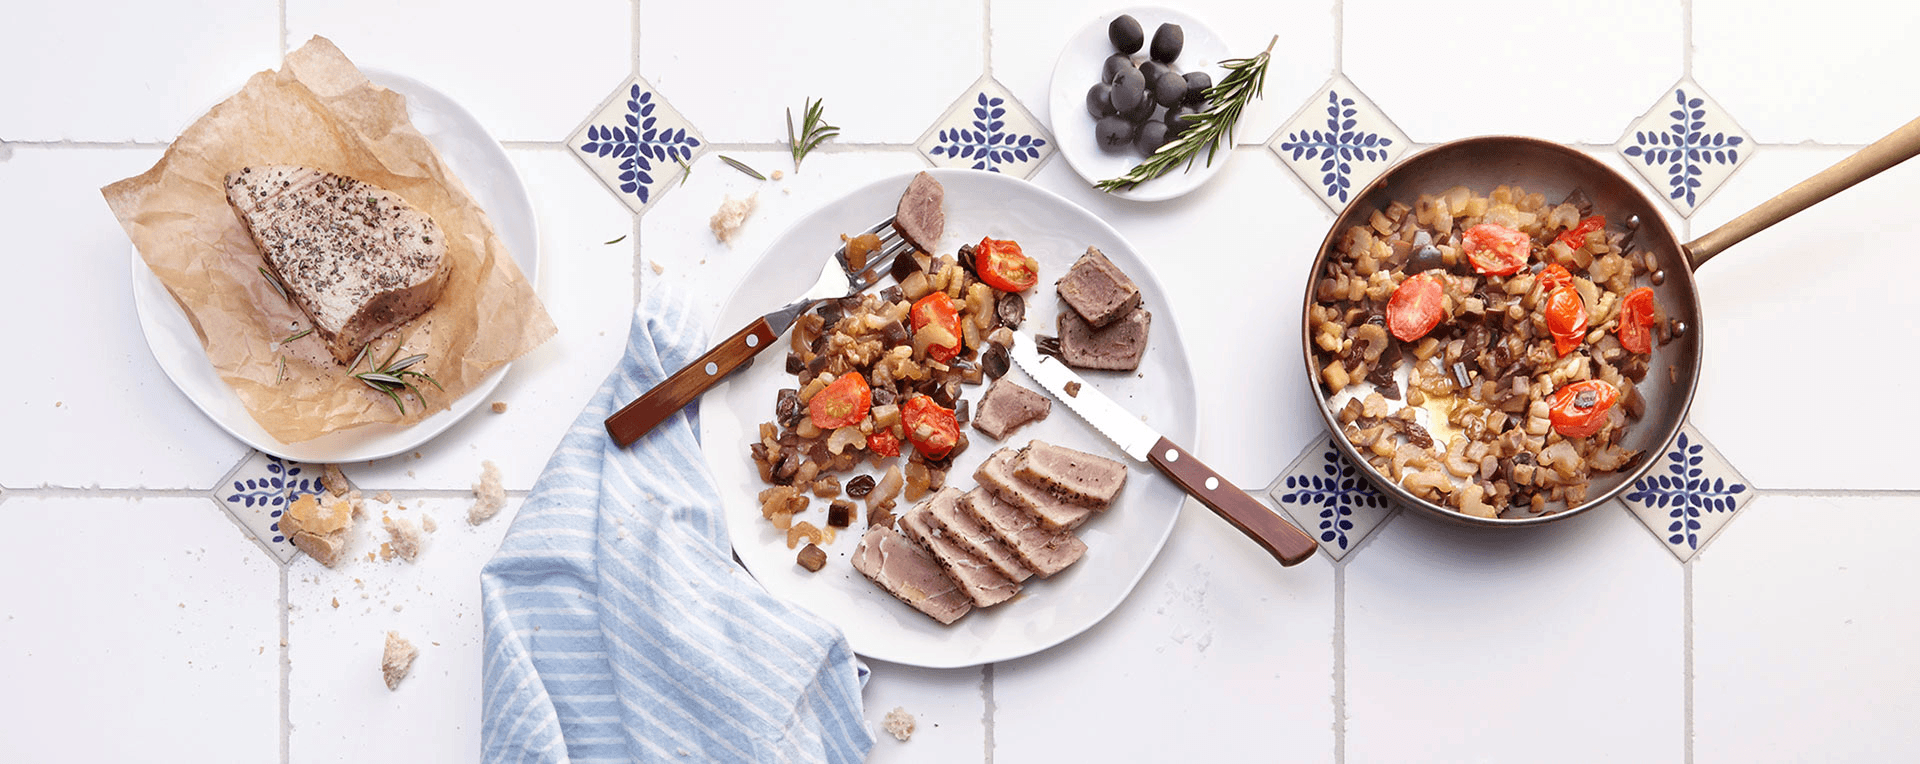 Thunfischfilet sizilianische Art mit süß-saurer Caponata Rezept - REWE.de